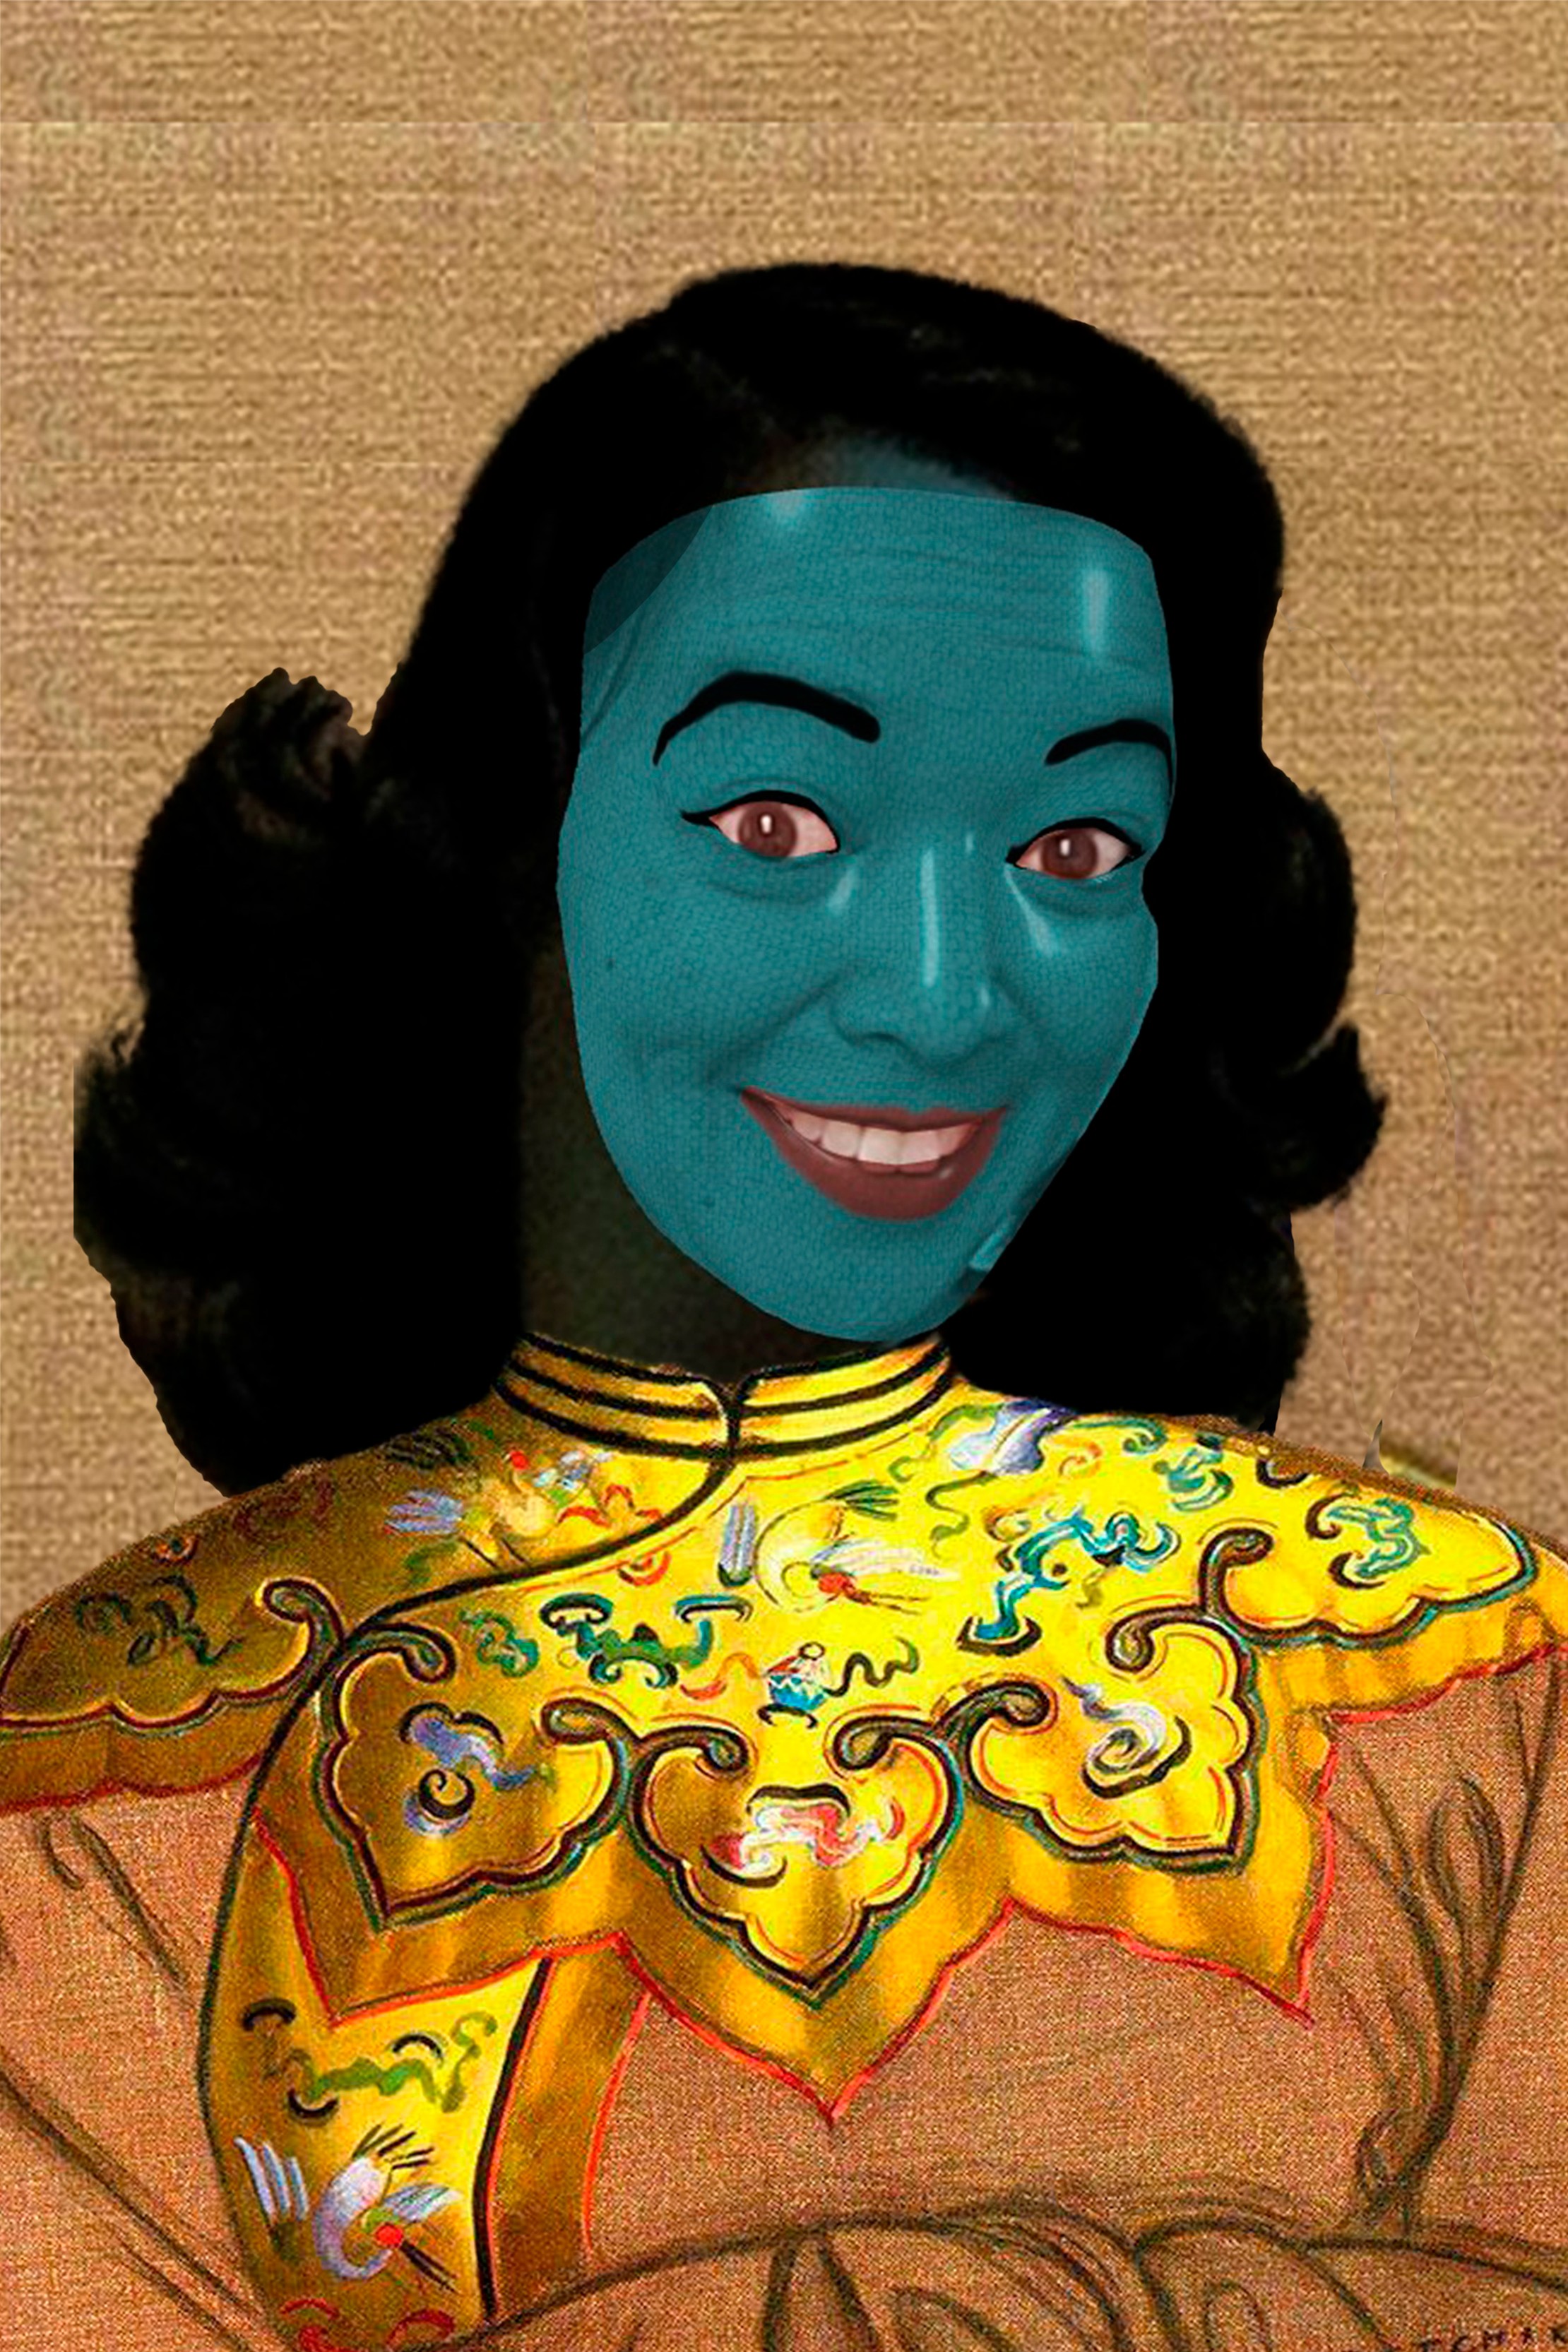 Li-Ming Hu's face superimposed onto Vladimir Tretchikoff's painting Chinese Girl.